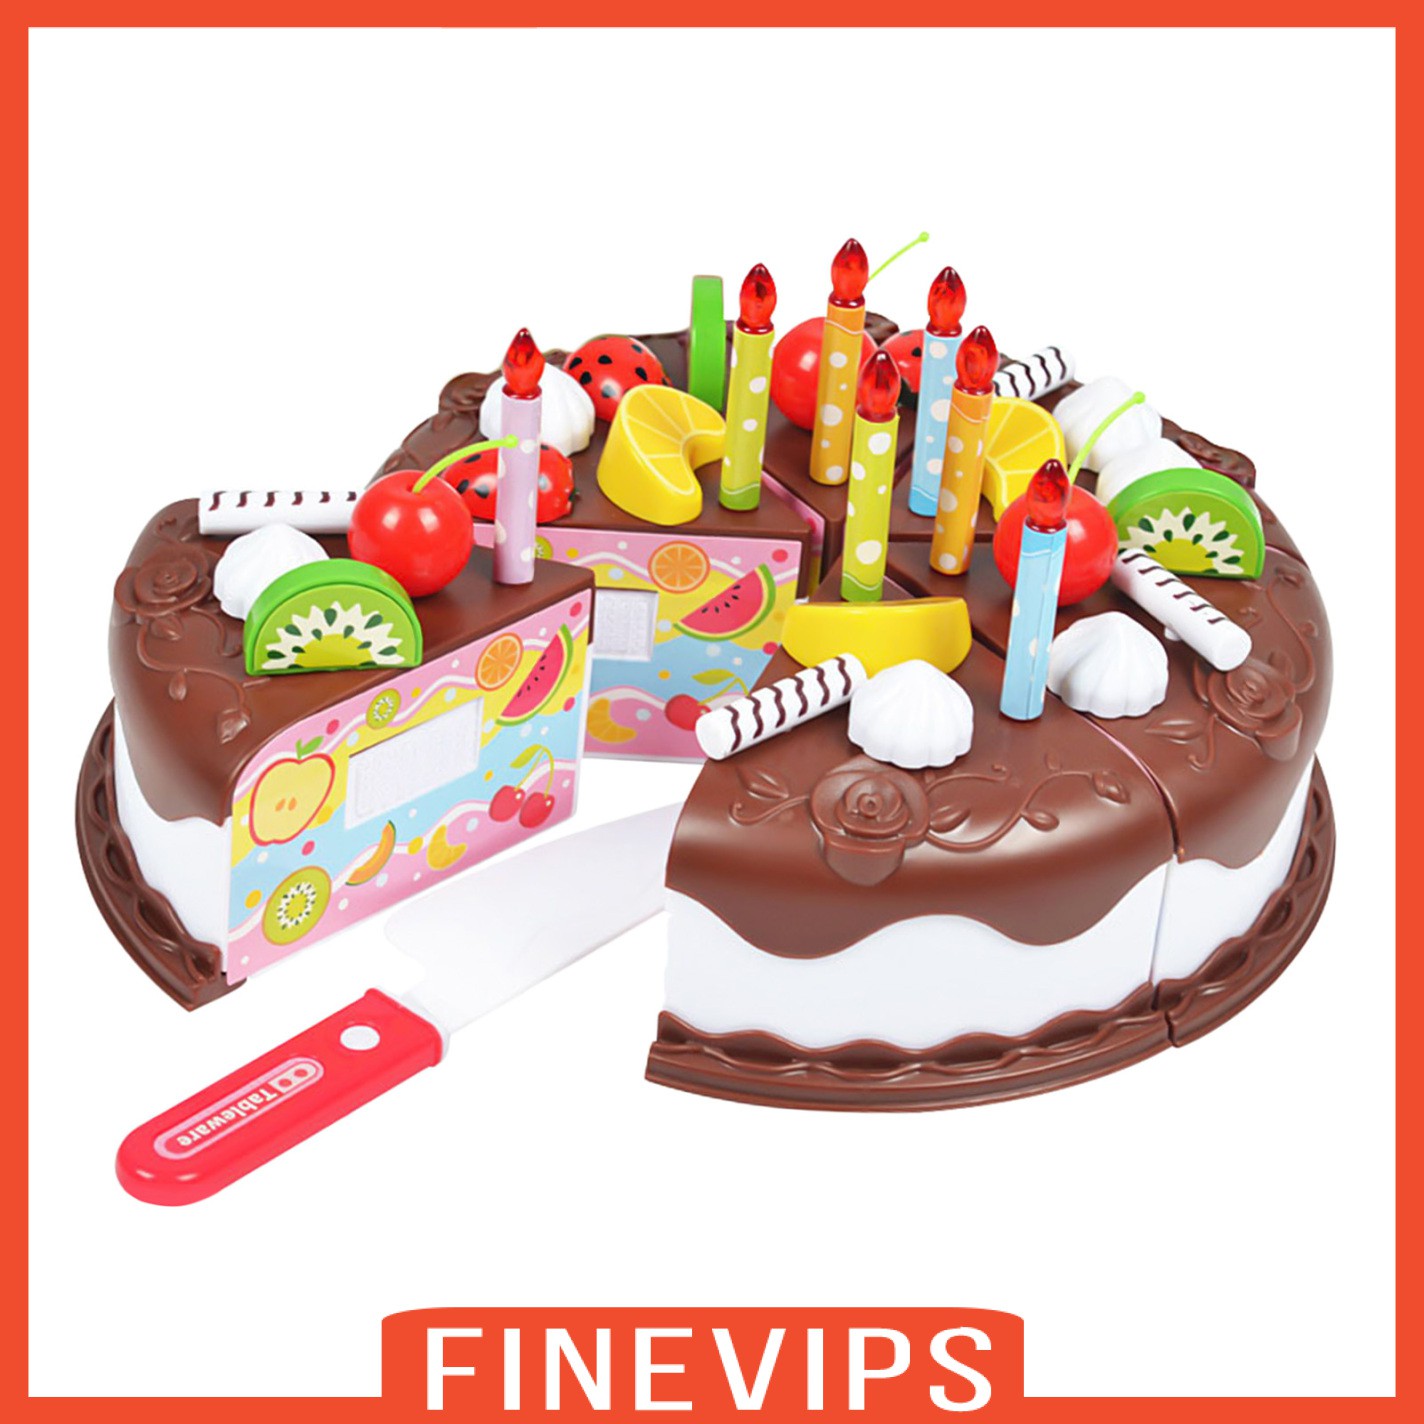 [FINEVIPS] 37 Pcs DIY Birthday Fruit Cake Set Kids Pretend Play Food Toy Kitchen Shop Gifts